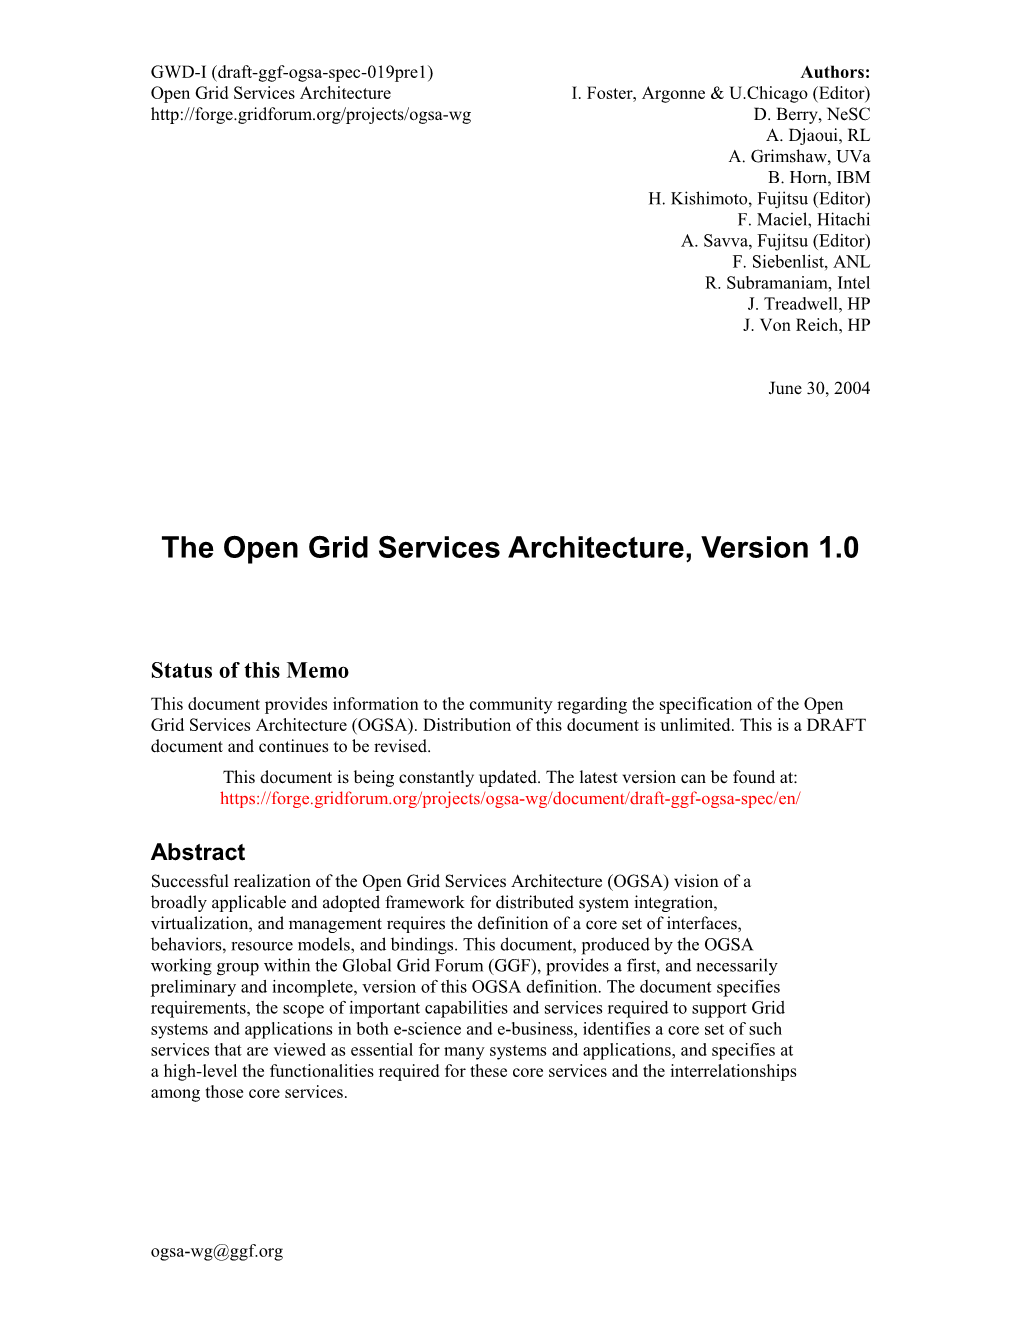 Open Grid Service Architecture